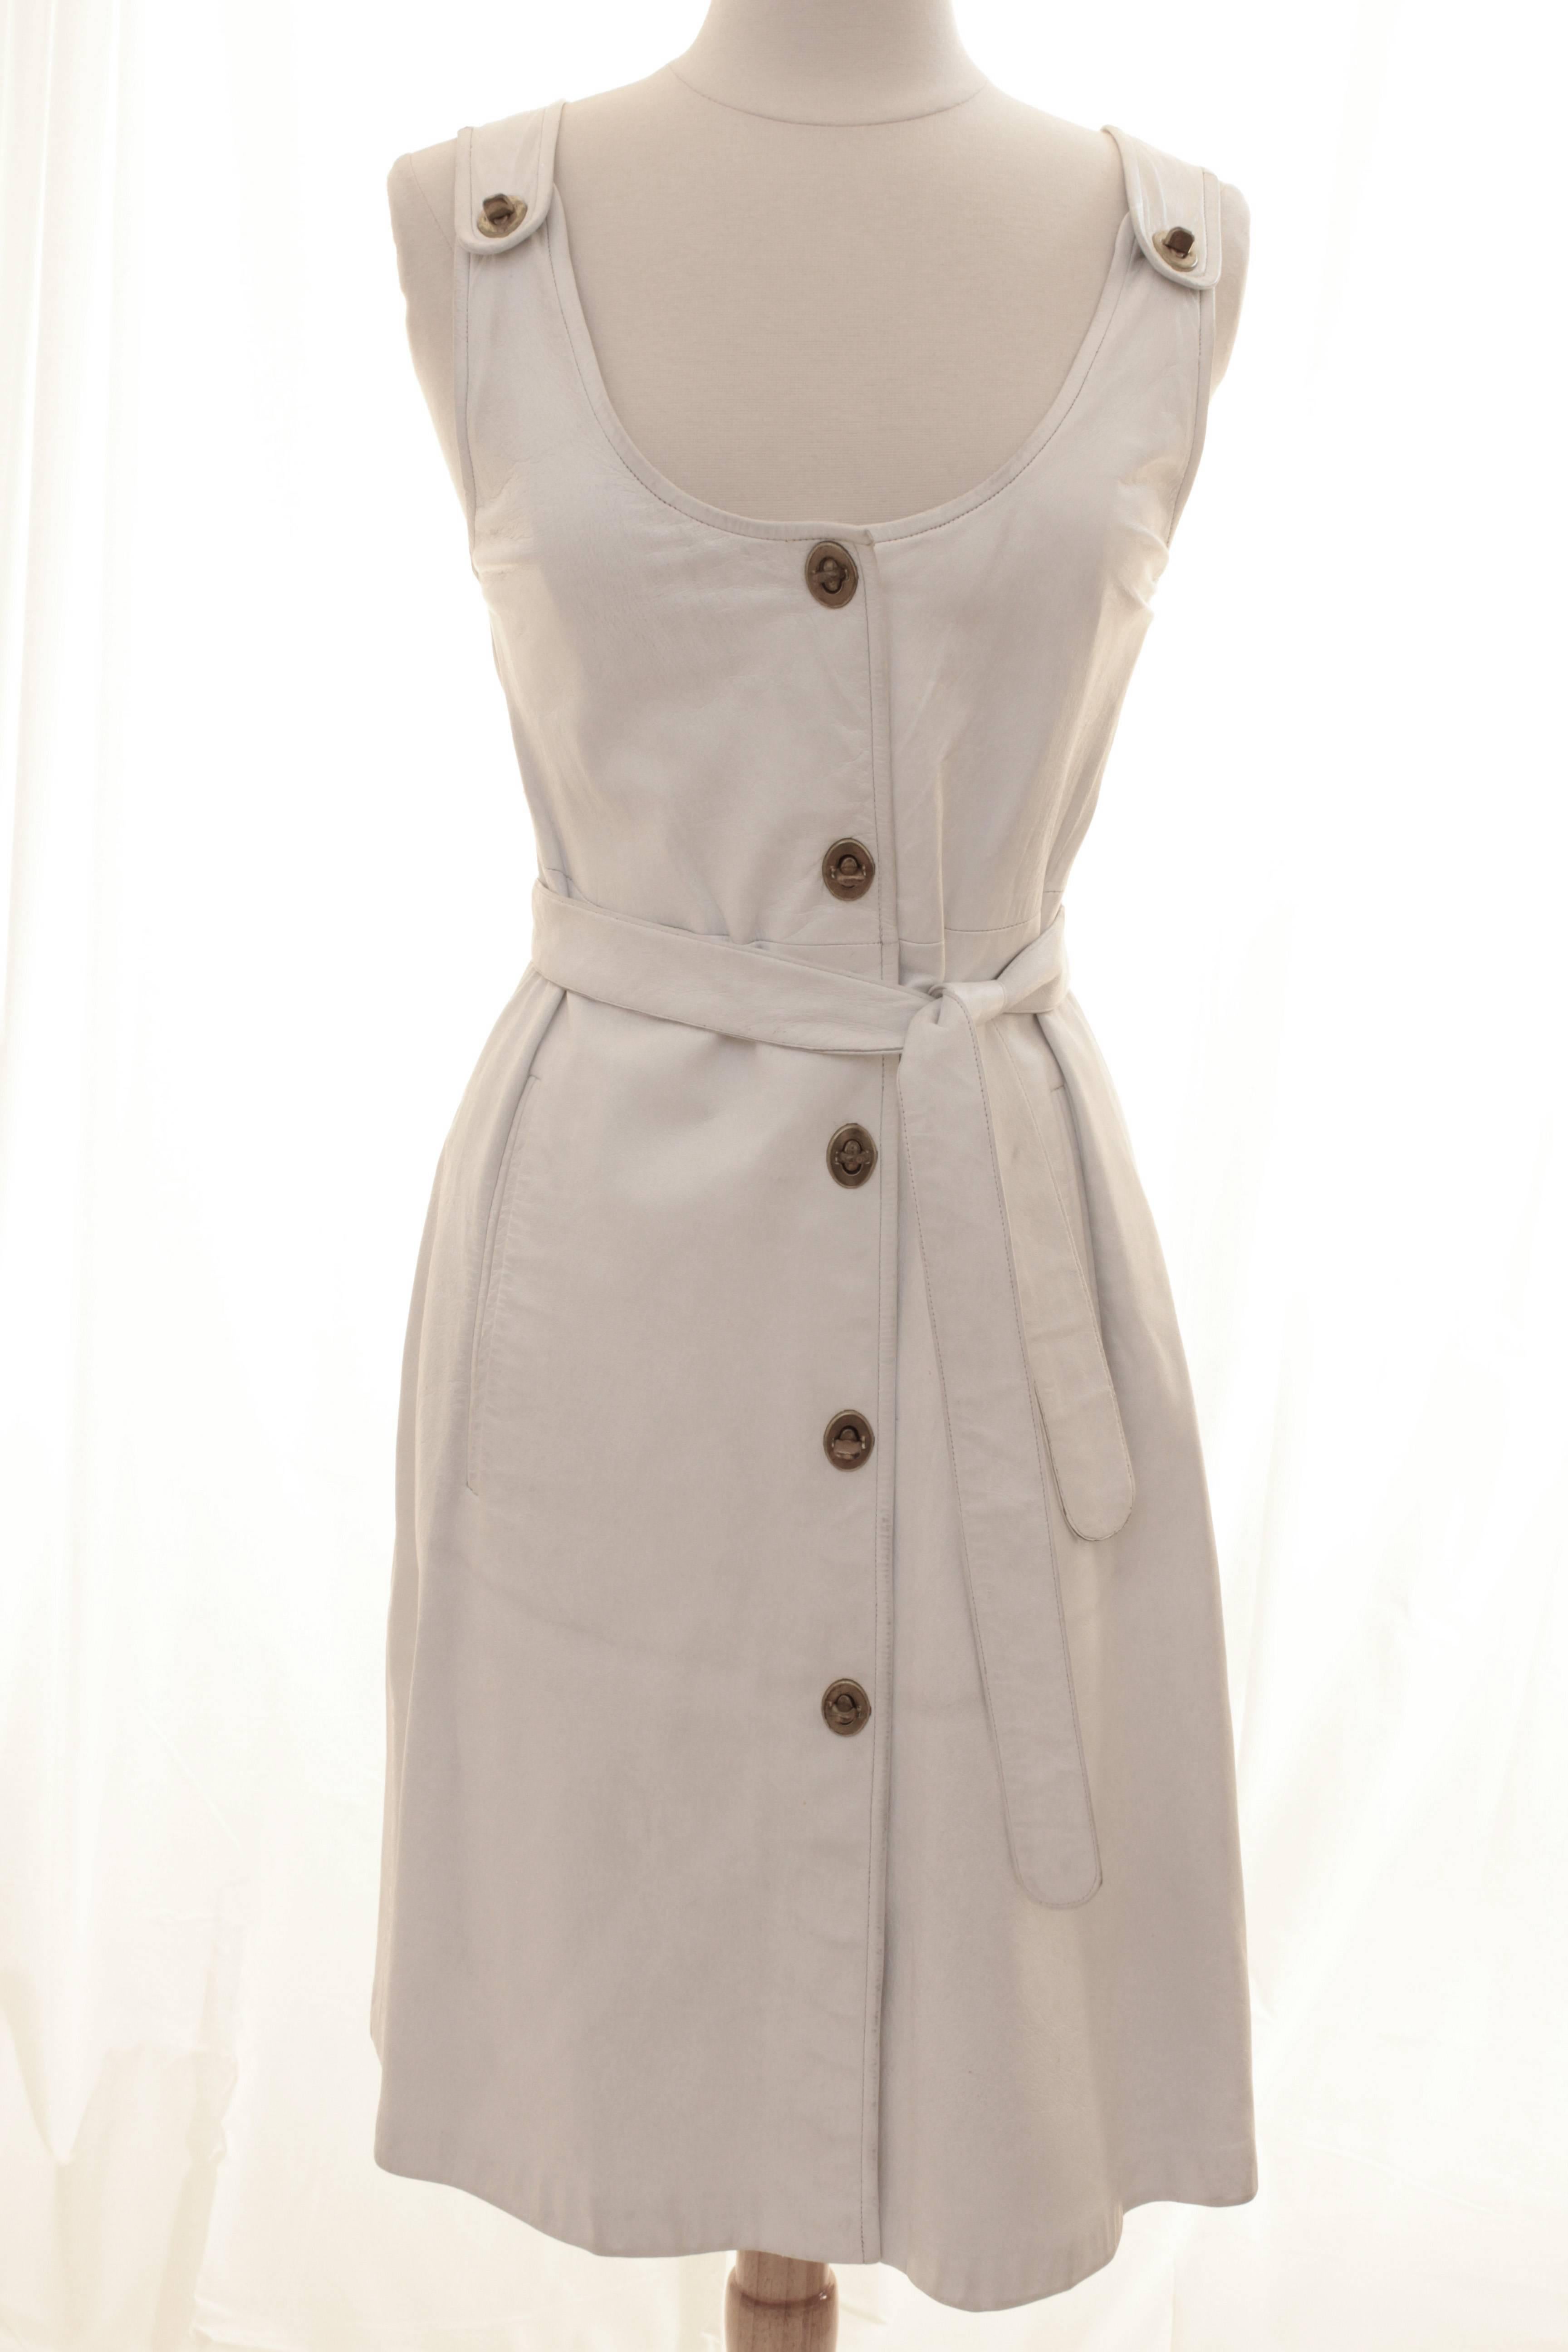 Gray Mod Bonnie Cashin White Leather Mini Dress Set with Matching Belt & Gloves 60s M